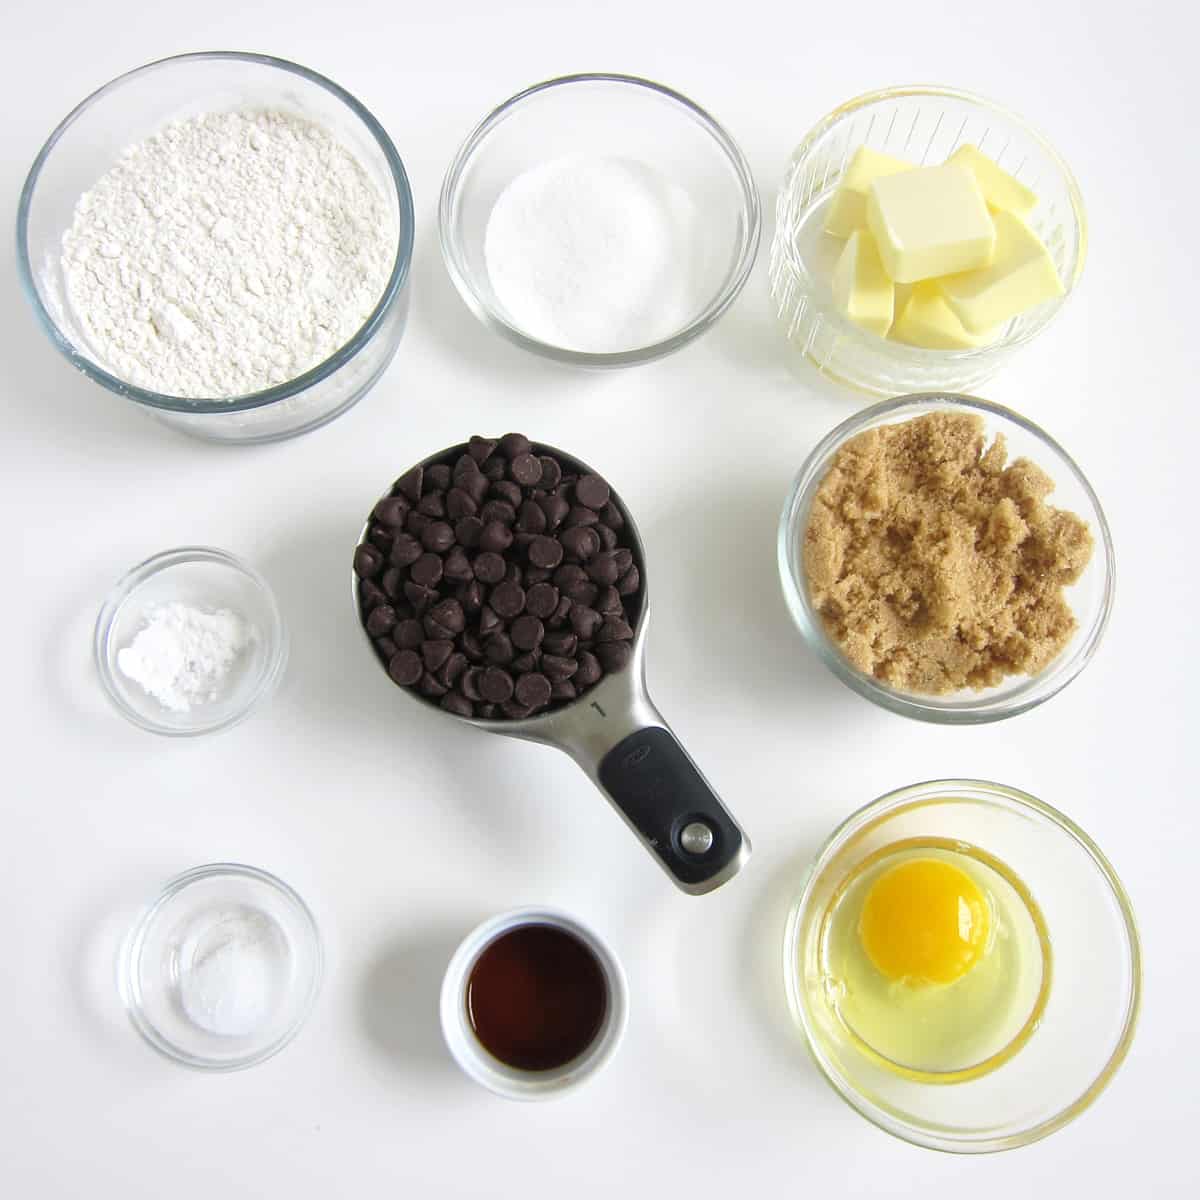 chocolate chip cookie dough ingredients: flour, sugar, butter, baking soda, chocolate chips, brown sugar, salt, vanilla, egg